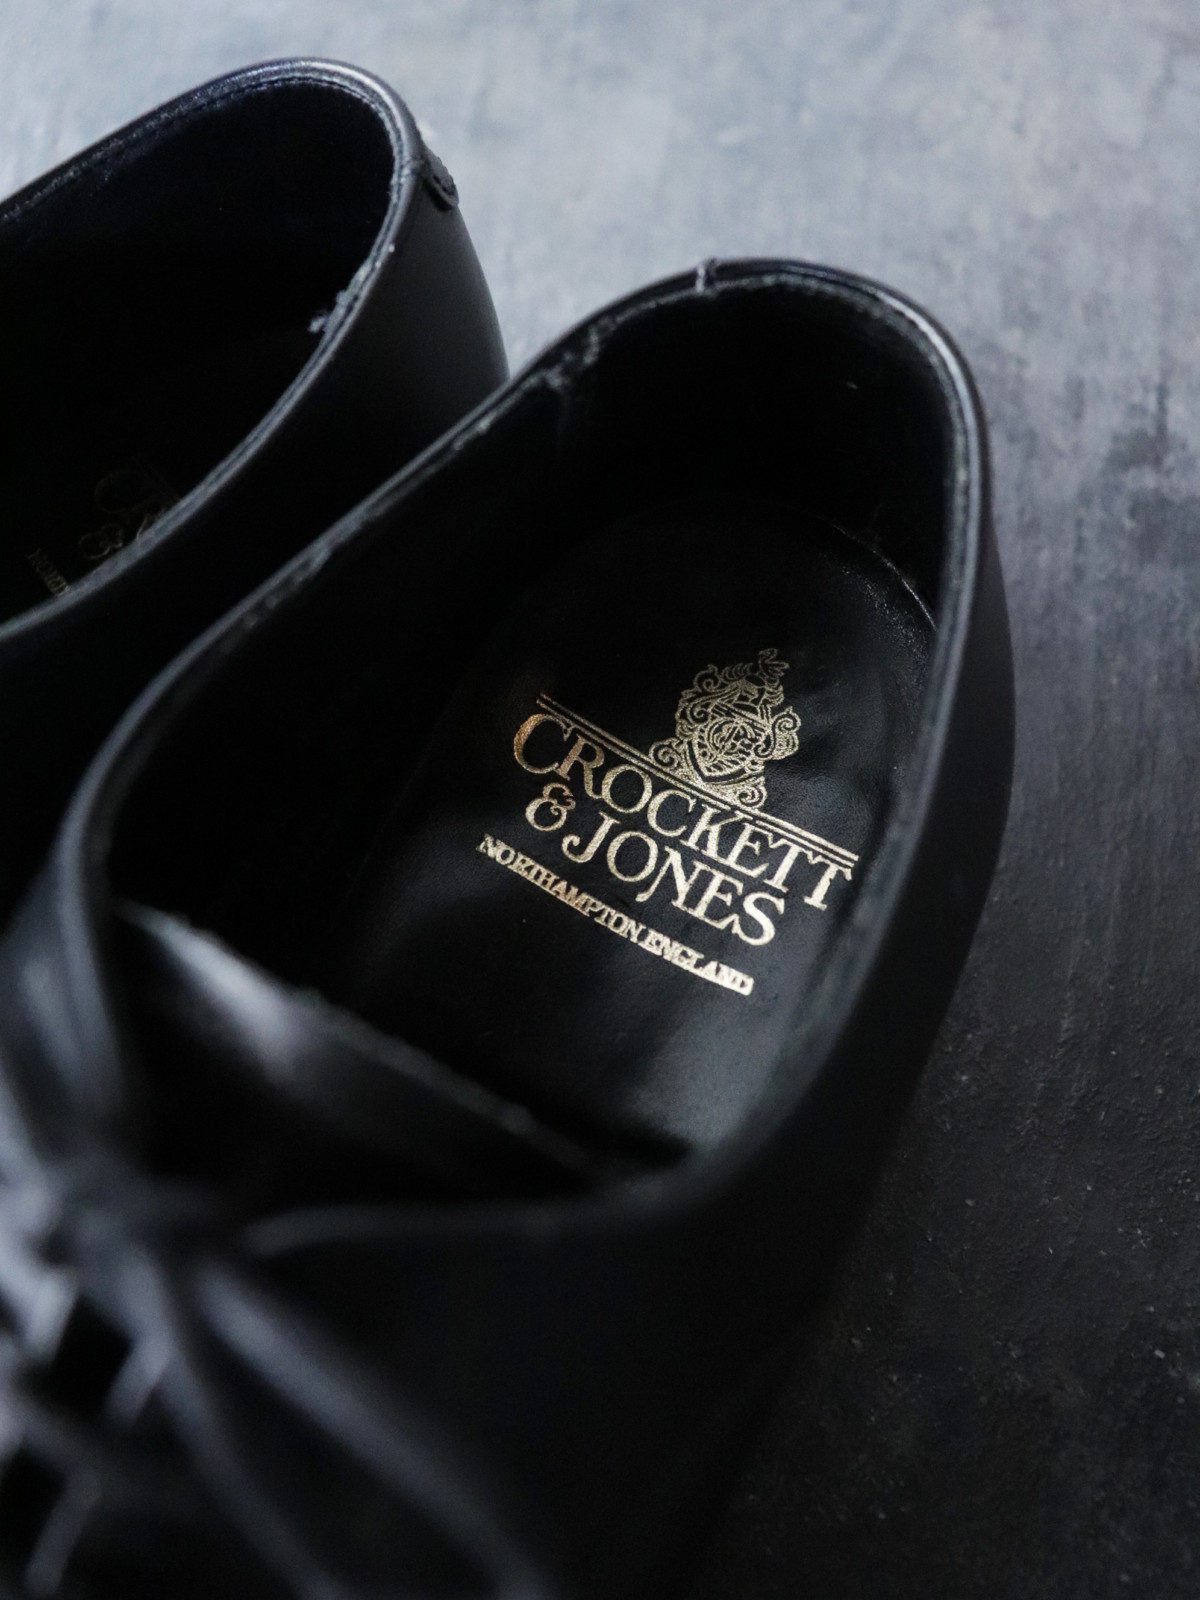 Crocket and johns,England,shoes